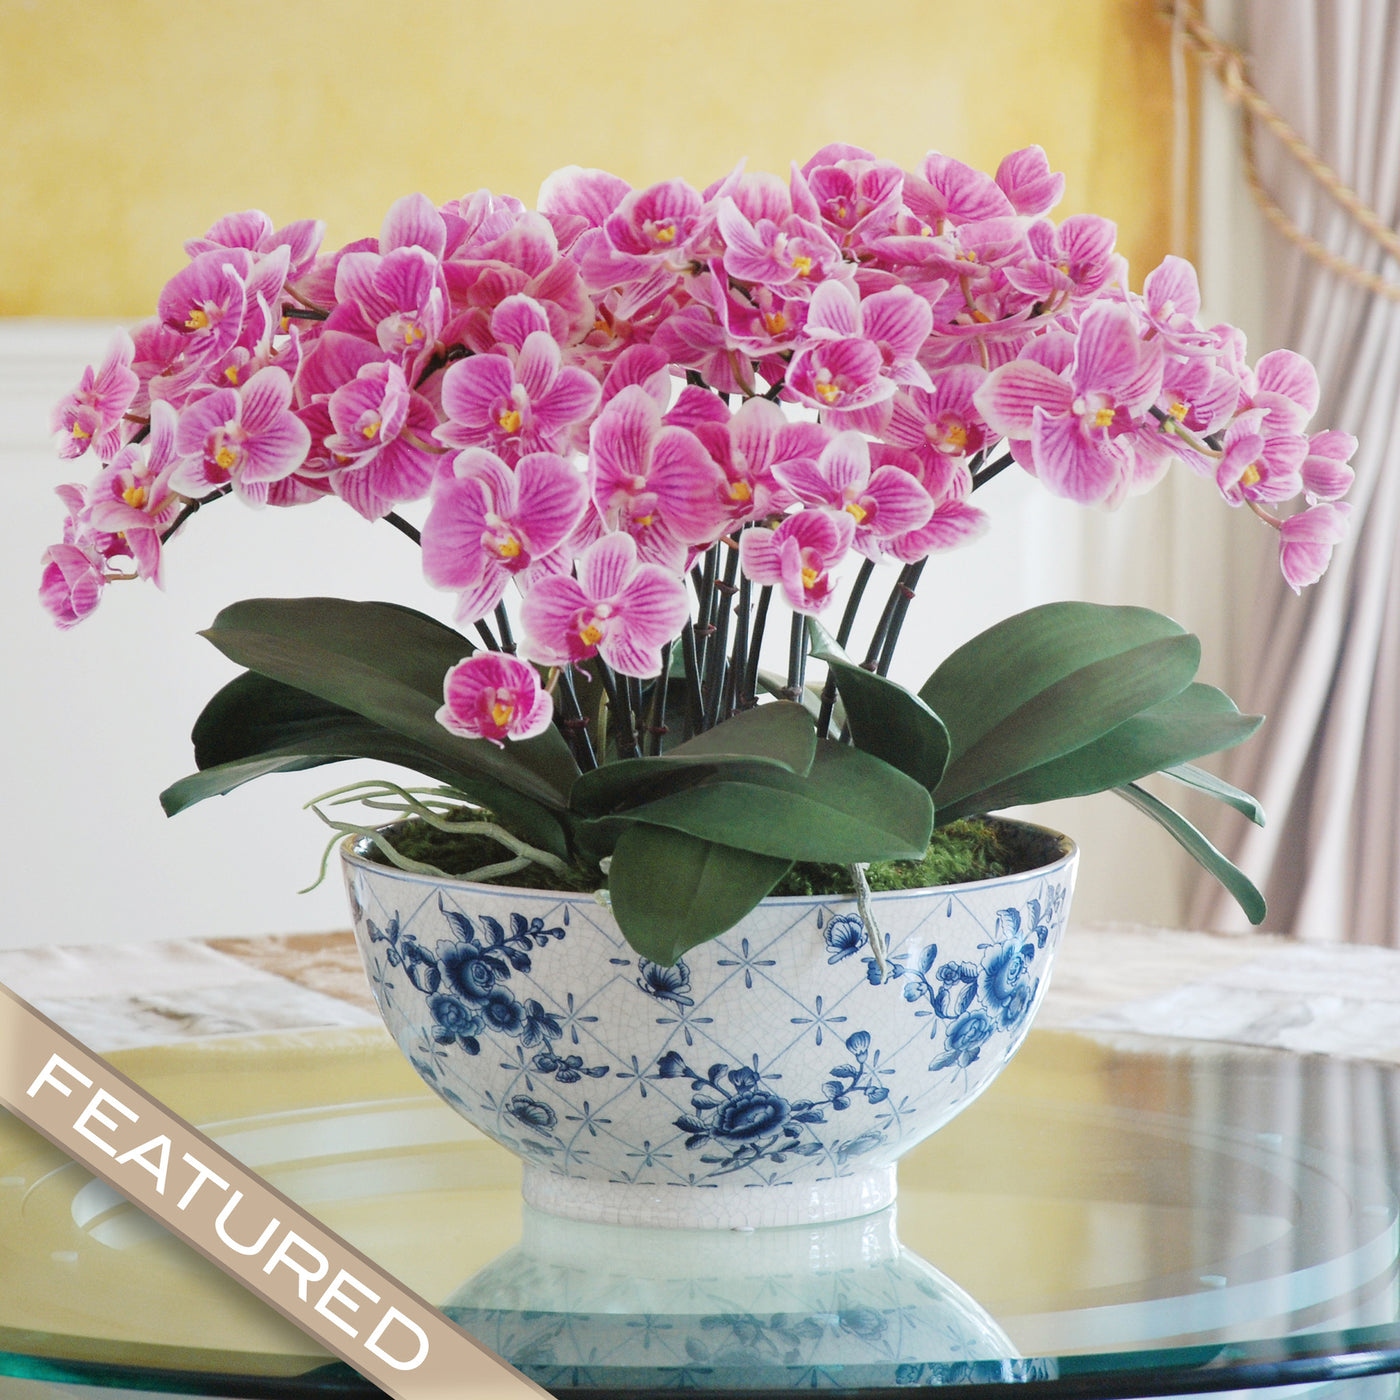 ECLECTIC PHALAENOPSIS ORCHID CENTERPIECE (DP770-PUWH) - Winward Home silk flower arrangements